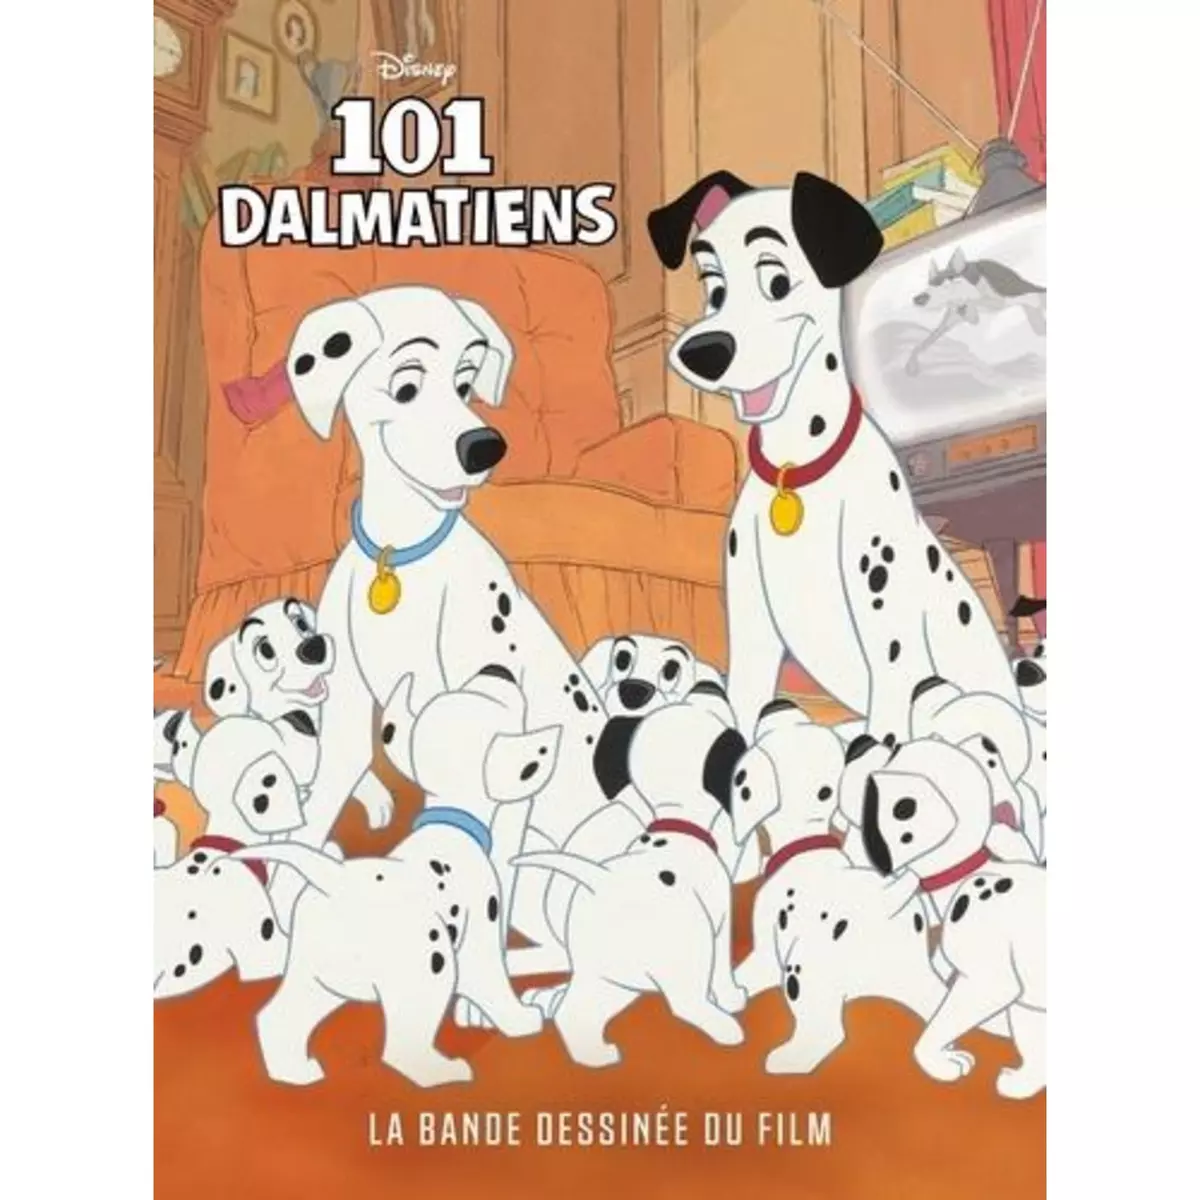  LES 101 DALMATIENS. LA BANDE DESSINEE DU FILM, Disney